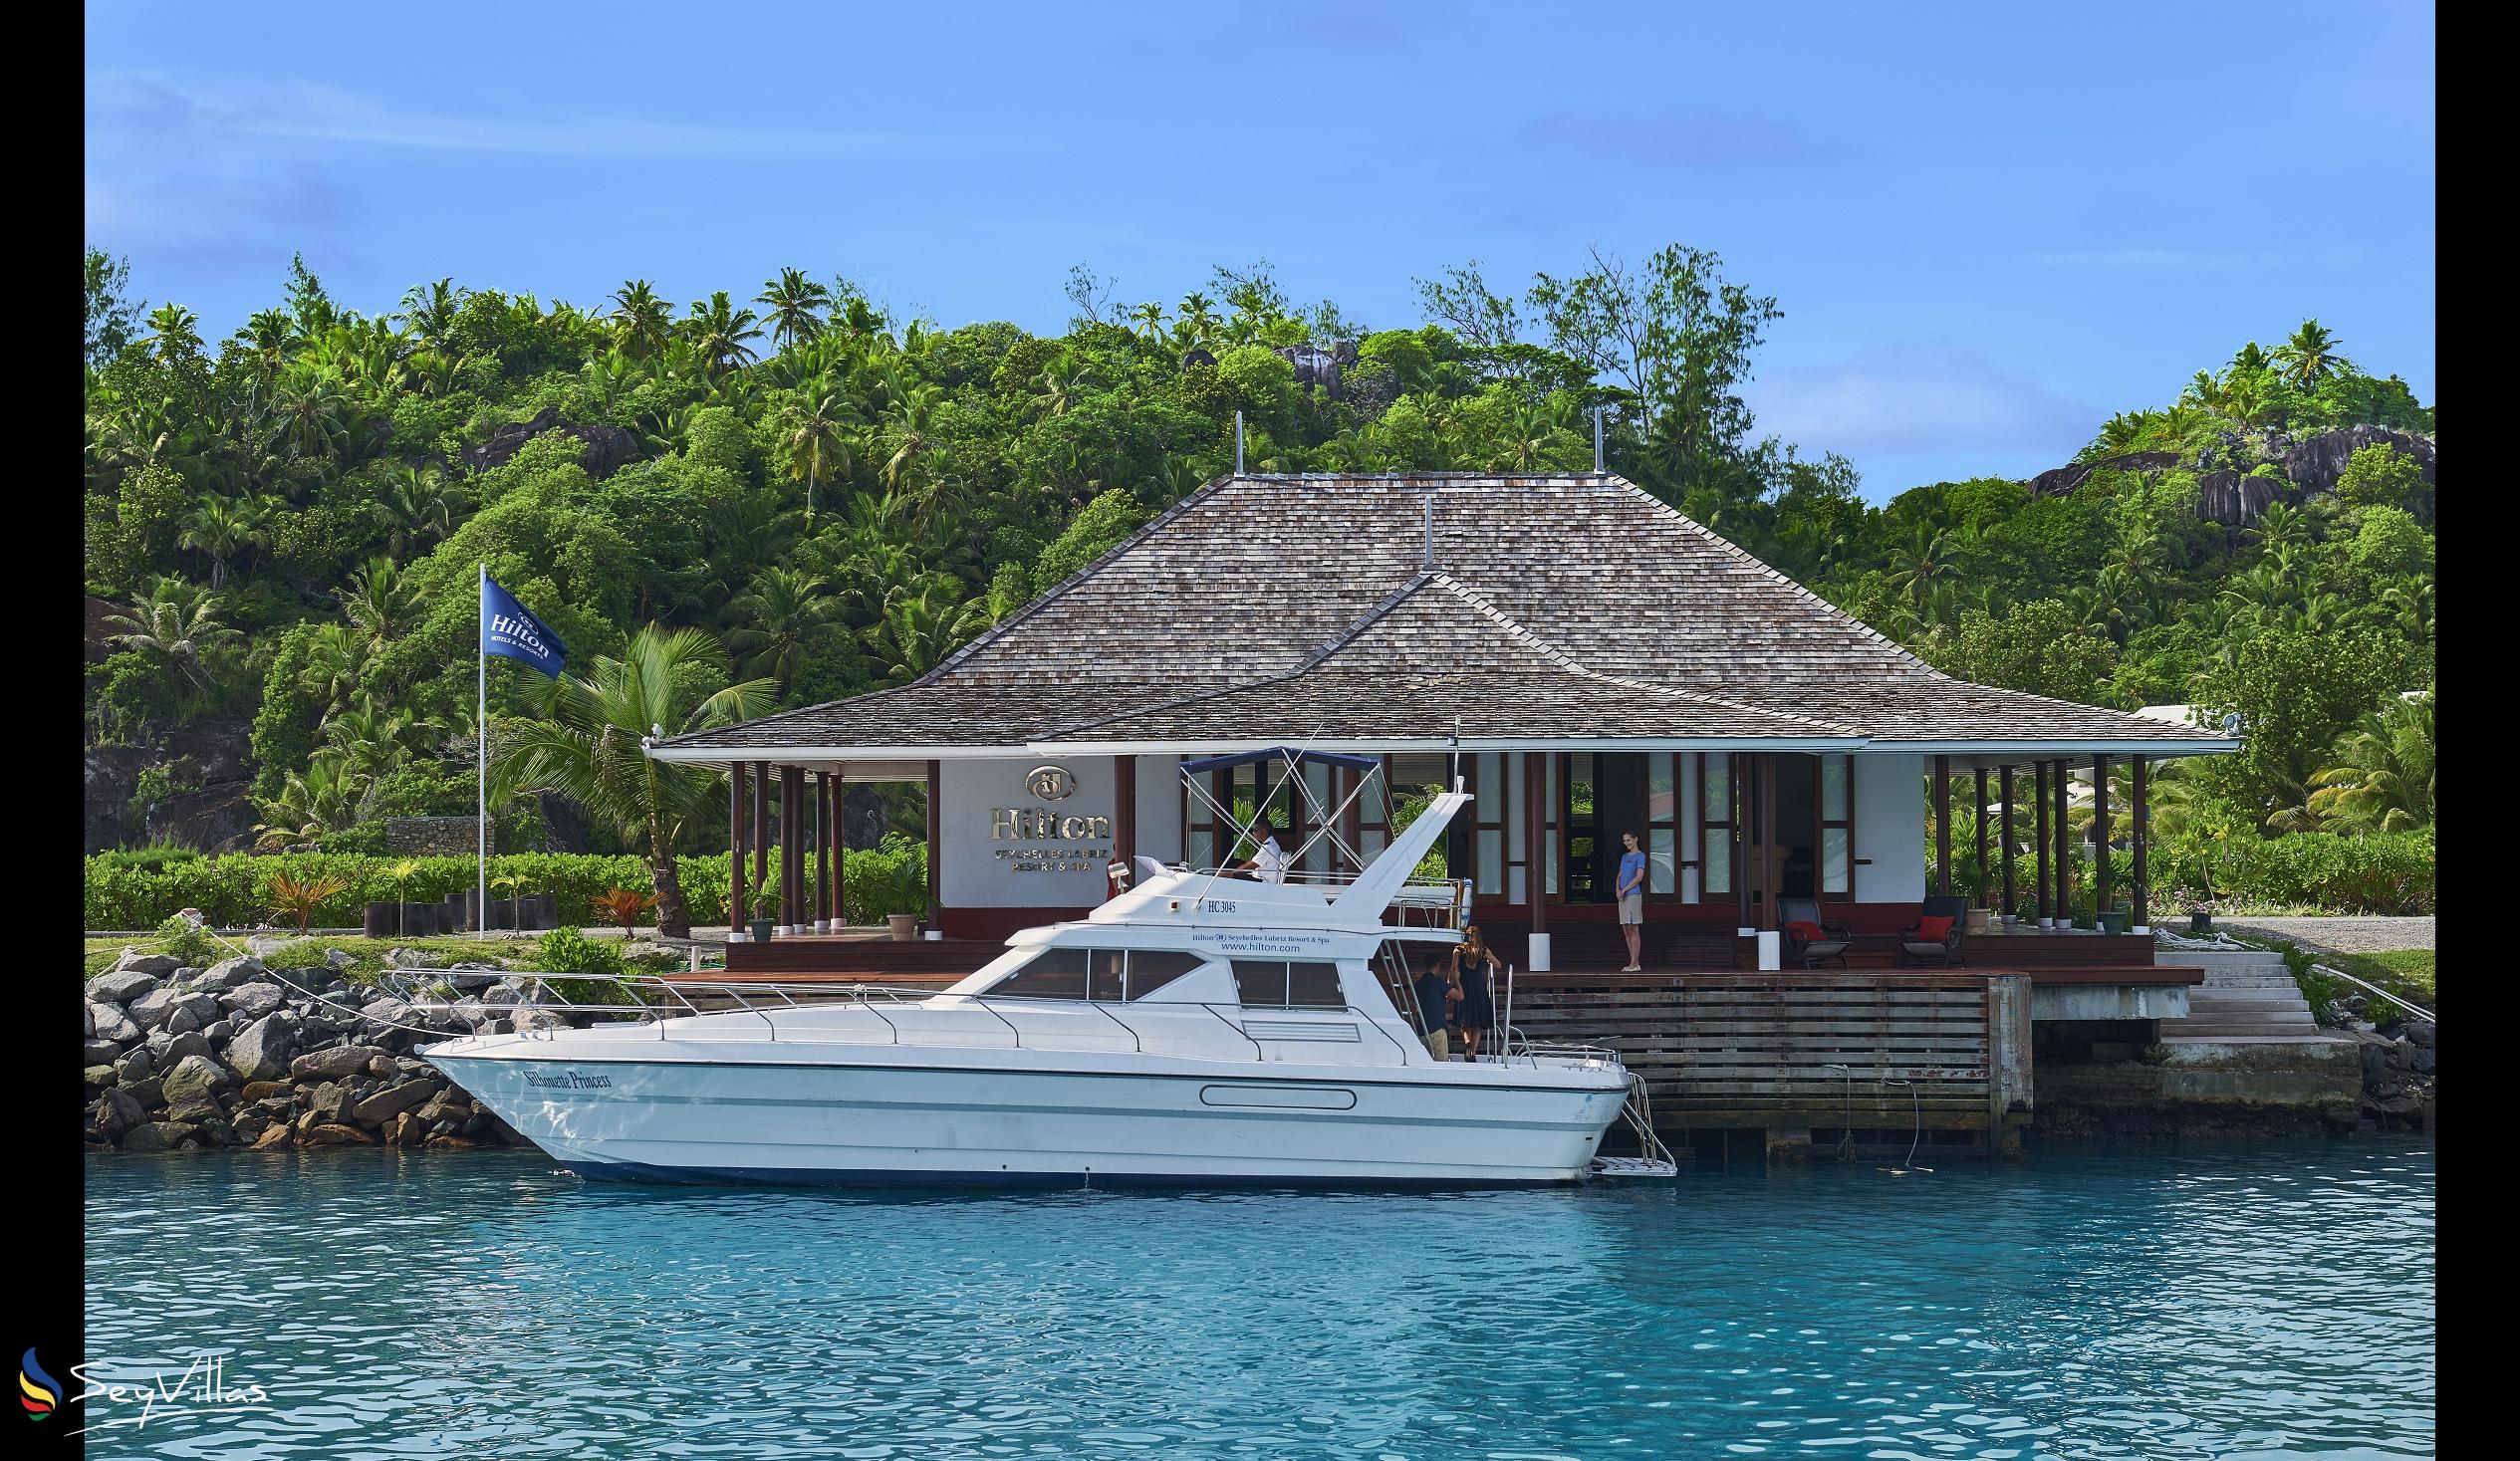 Photo 86: Hilton Seychelles Labriz Resort & Spa - Outdoor area - Silhouette Island (Seychelles)